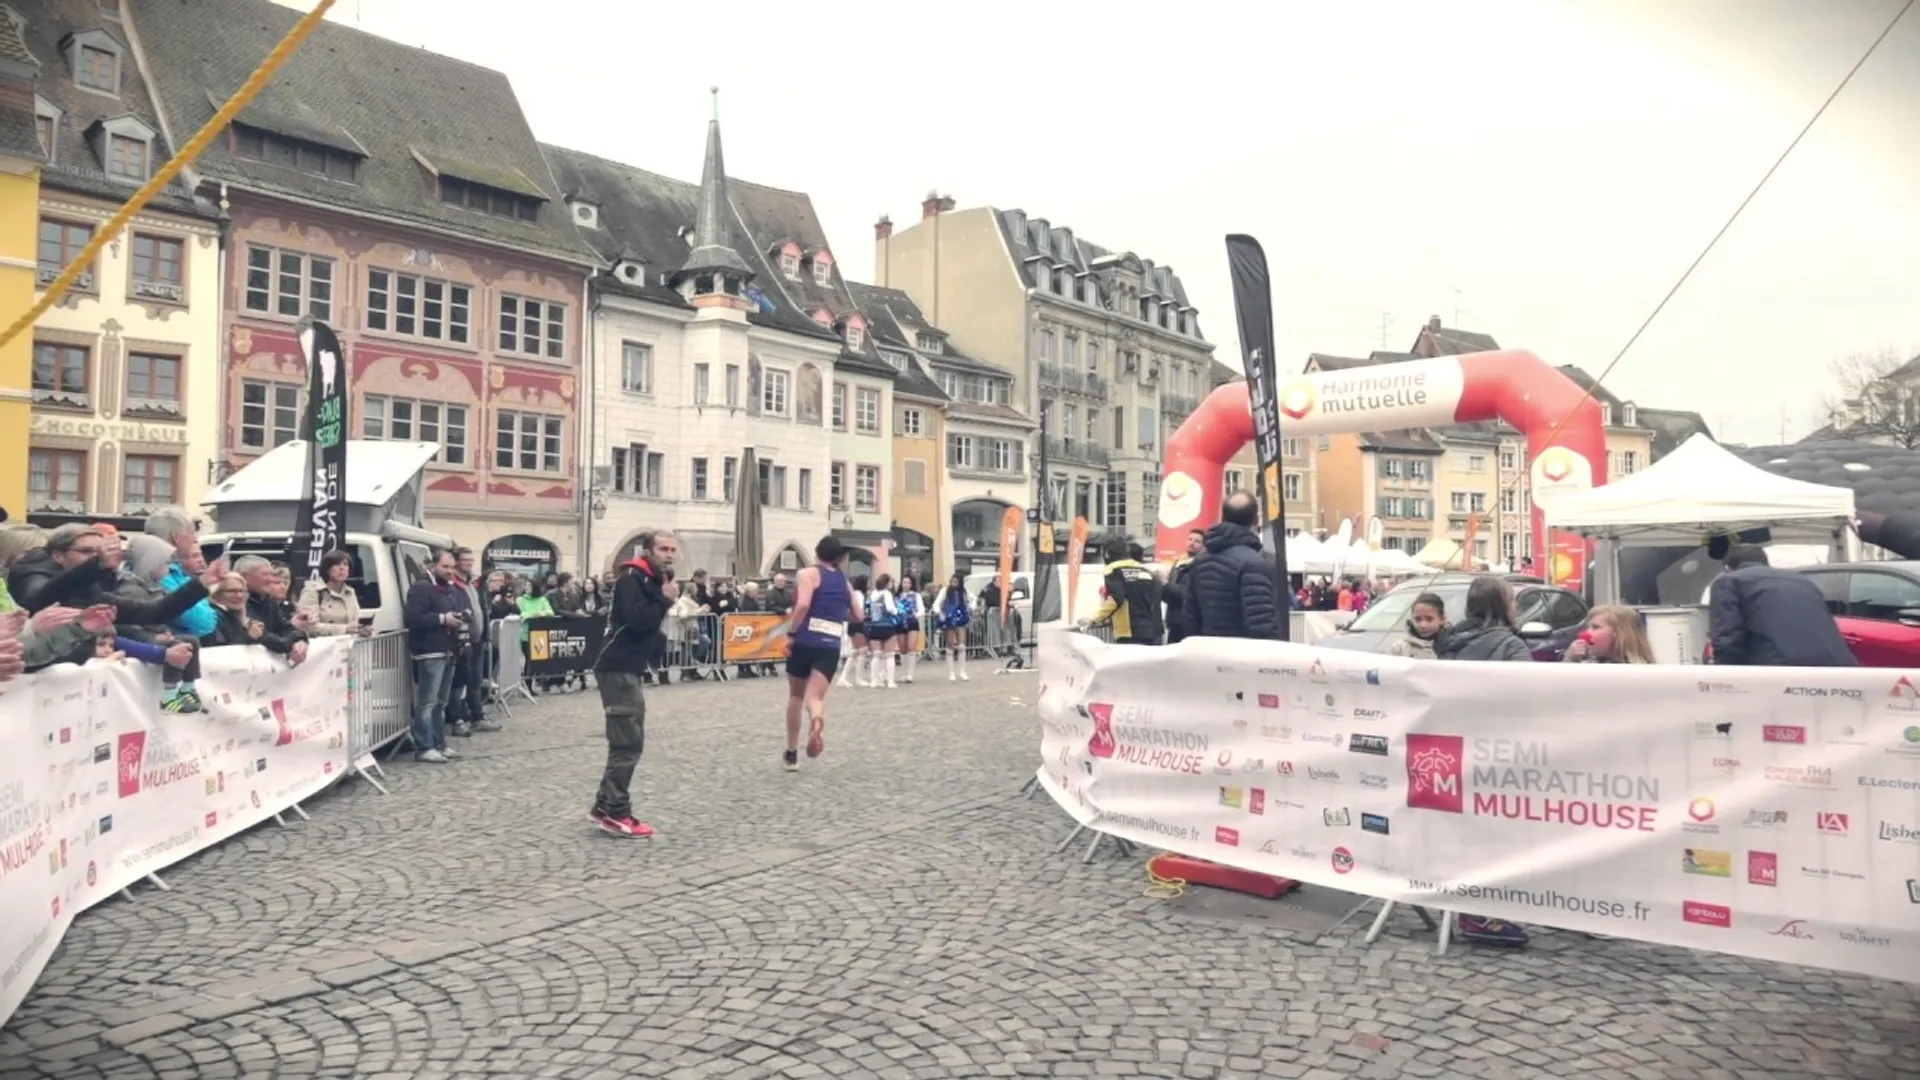 Semi-Marathon de Mulhouse